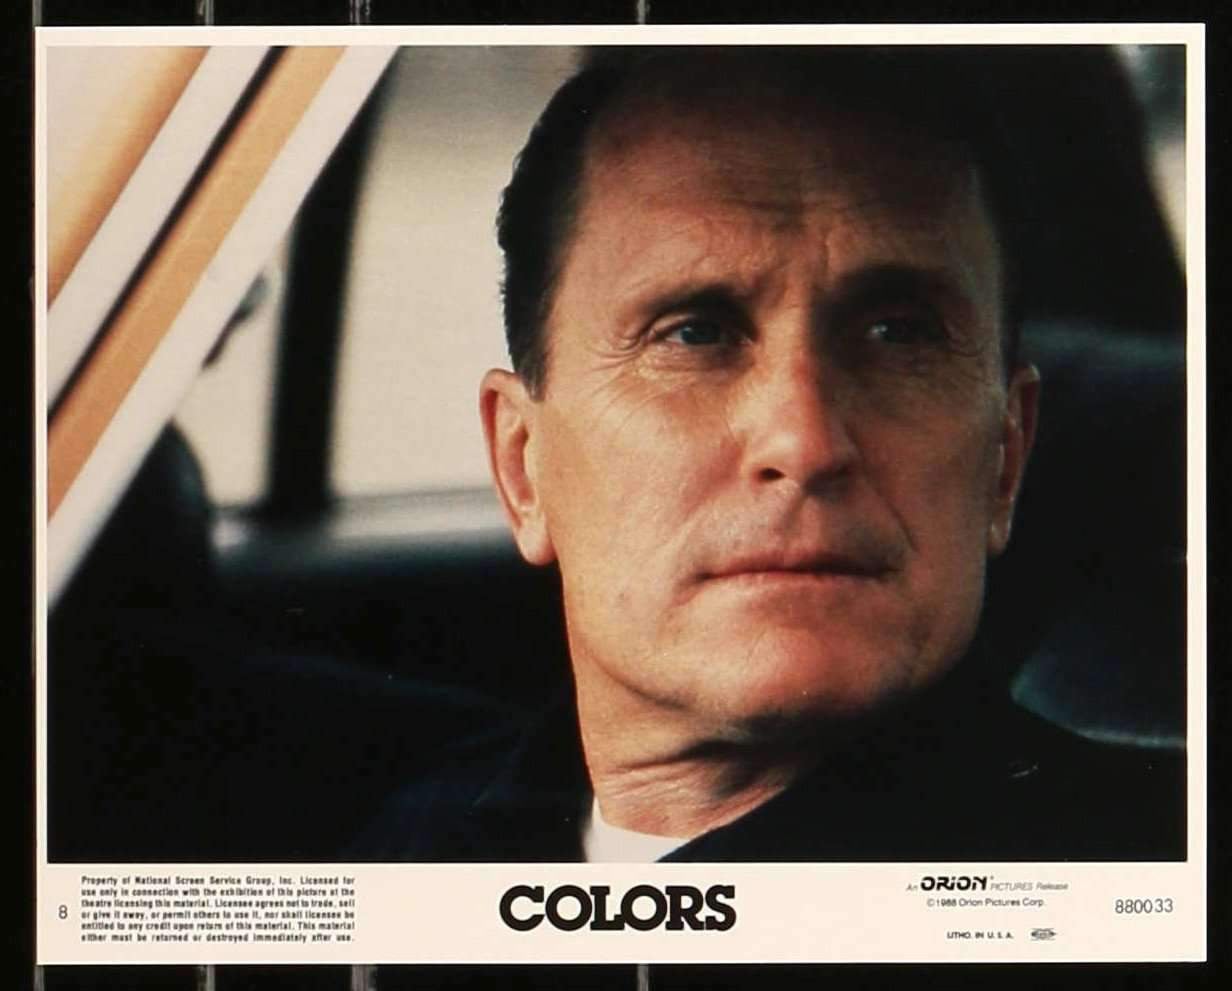 Colors (1988) Movie Still Photos - Set of 8 original movie poster for sale at Original Film Art